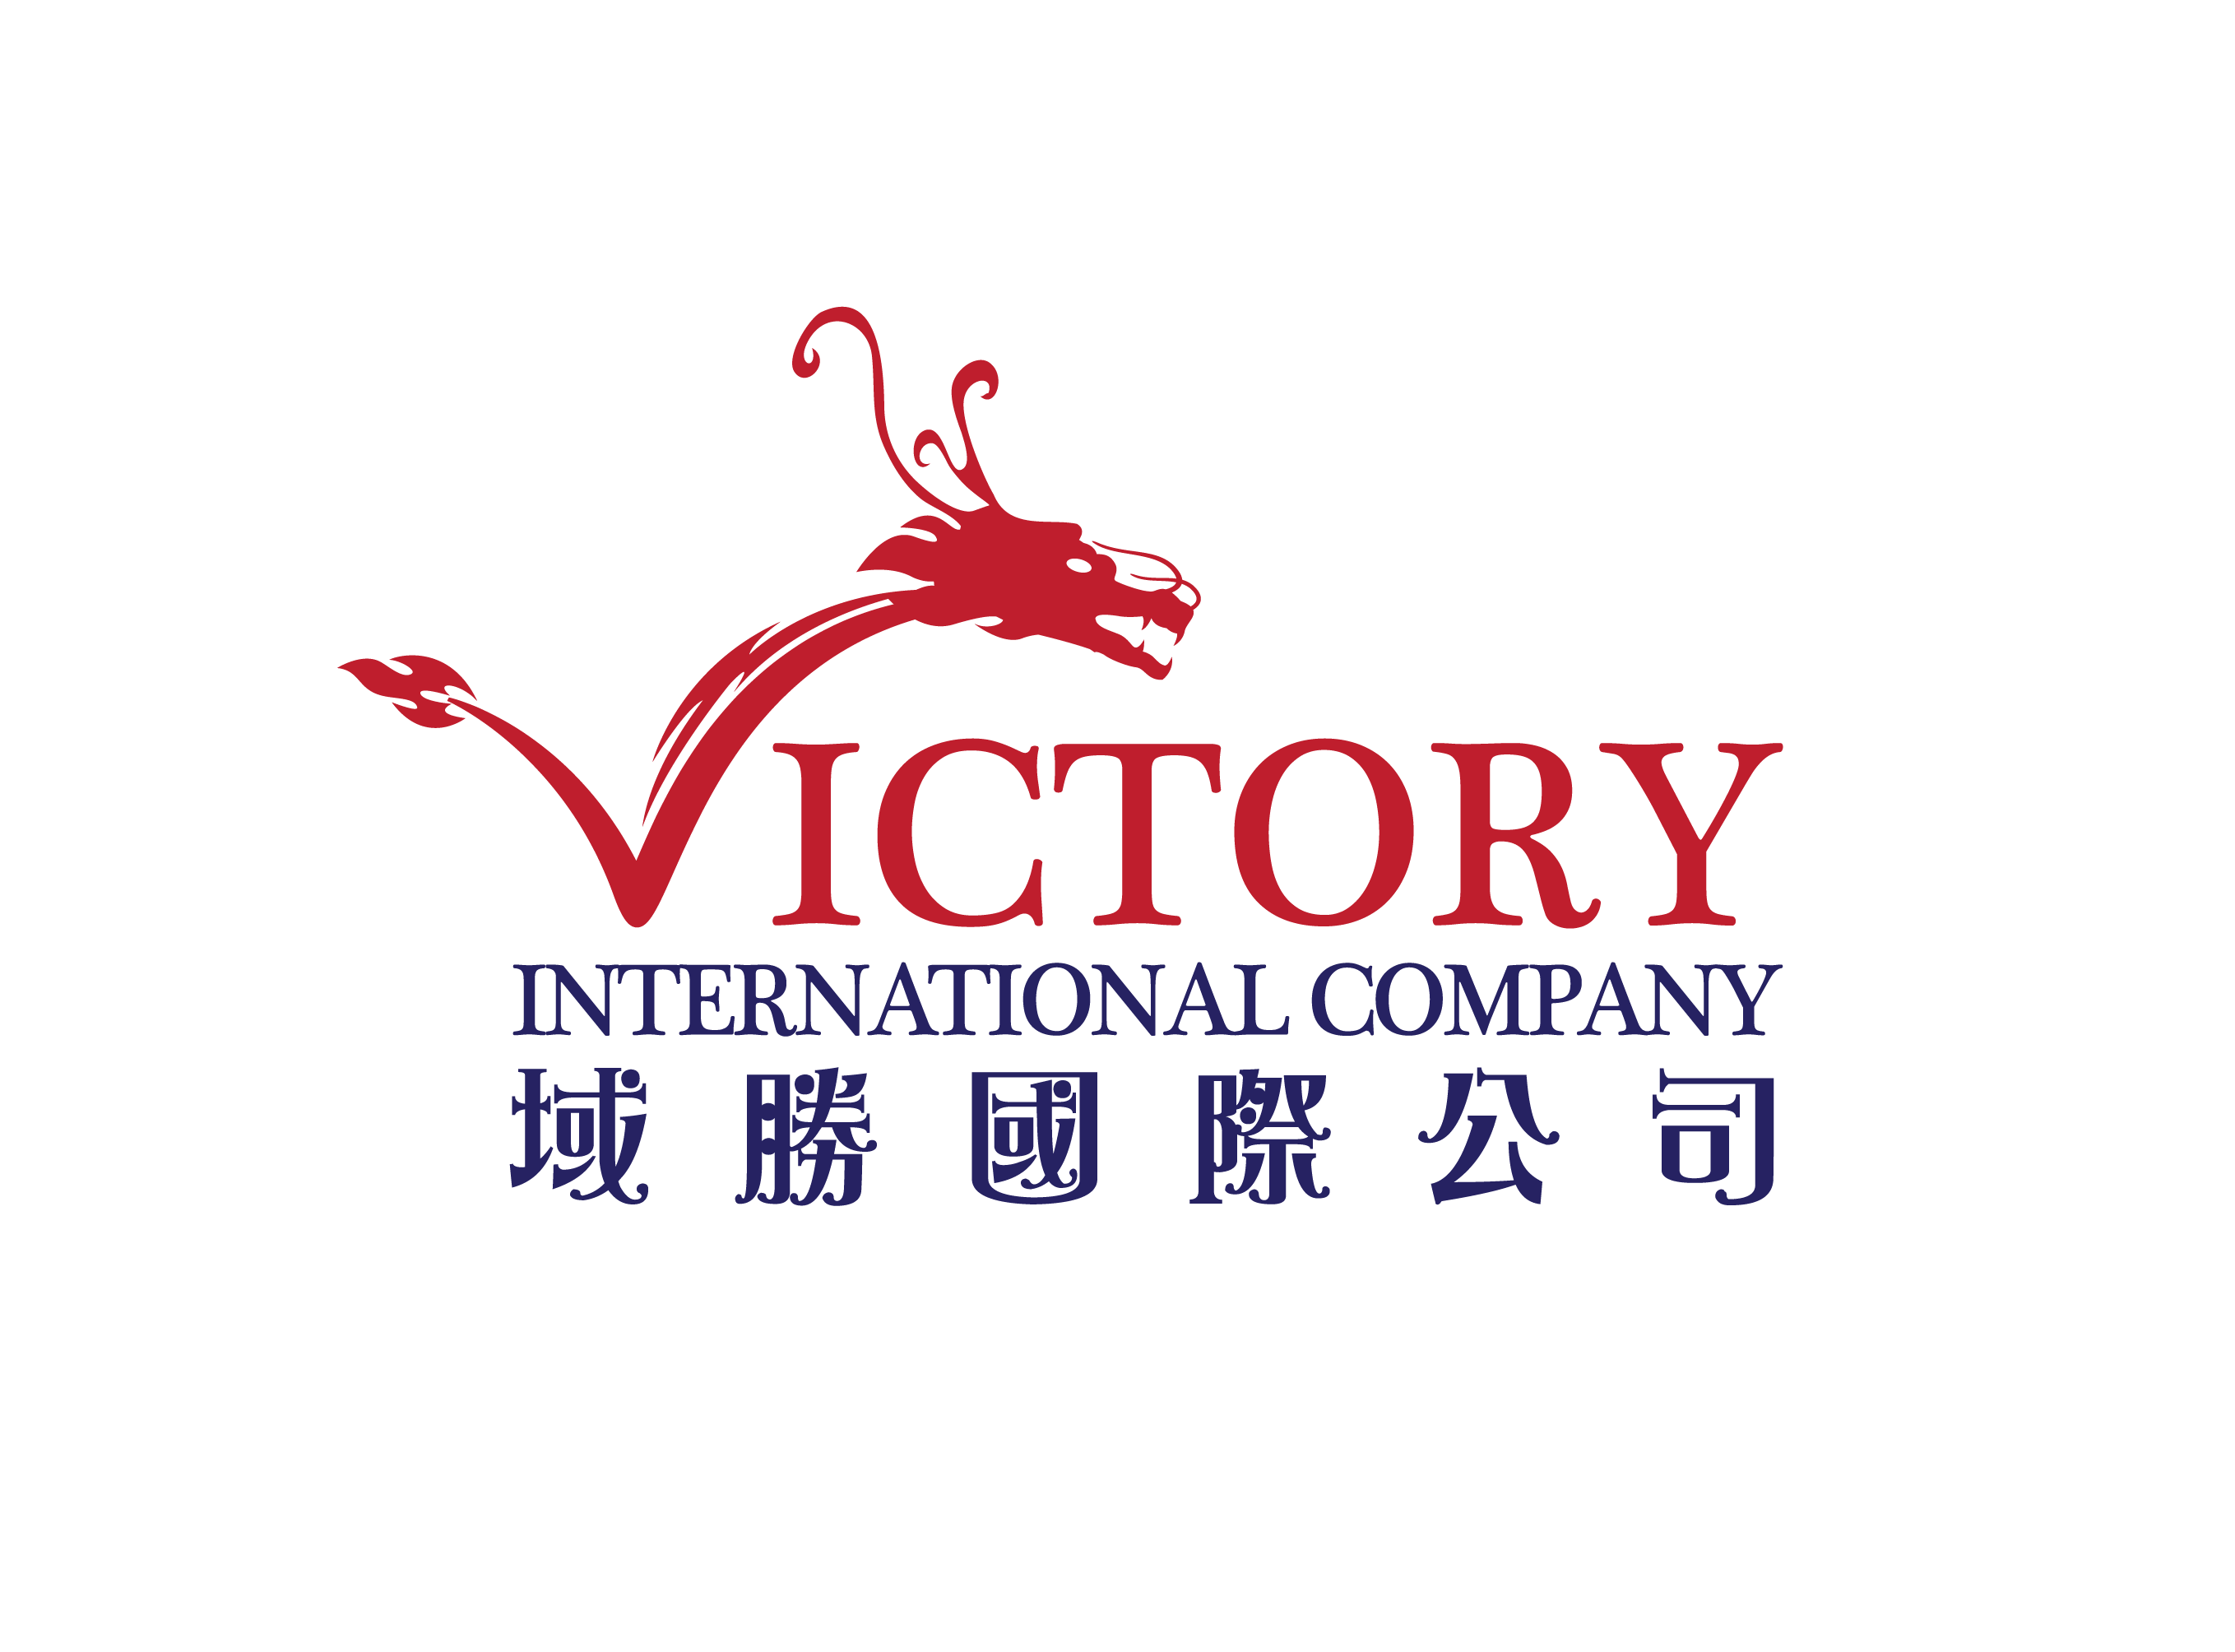 Victory International Company